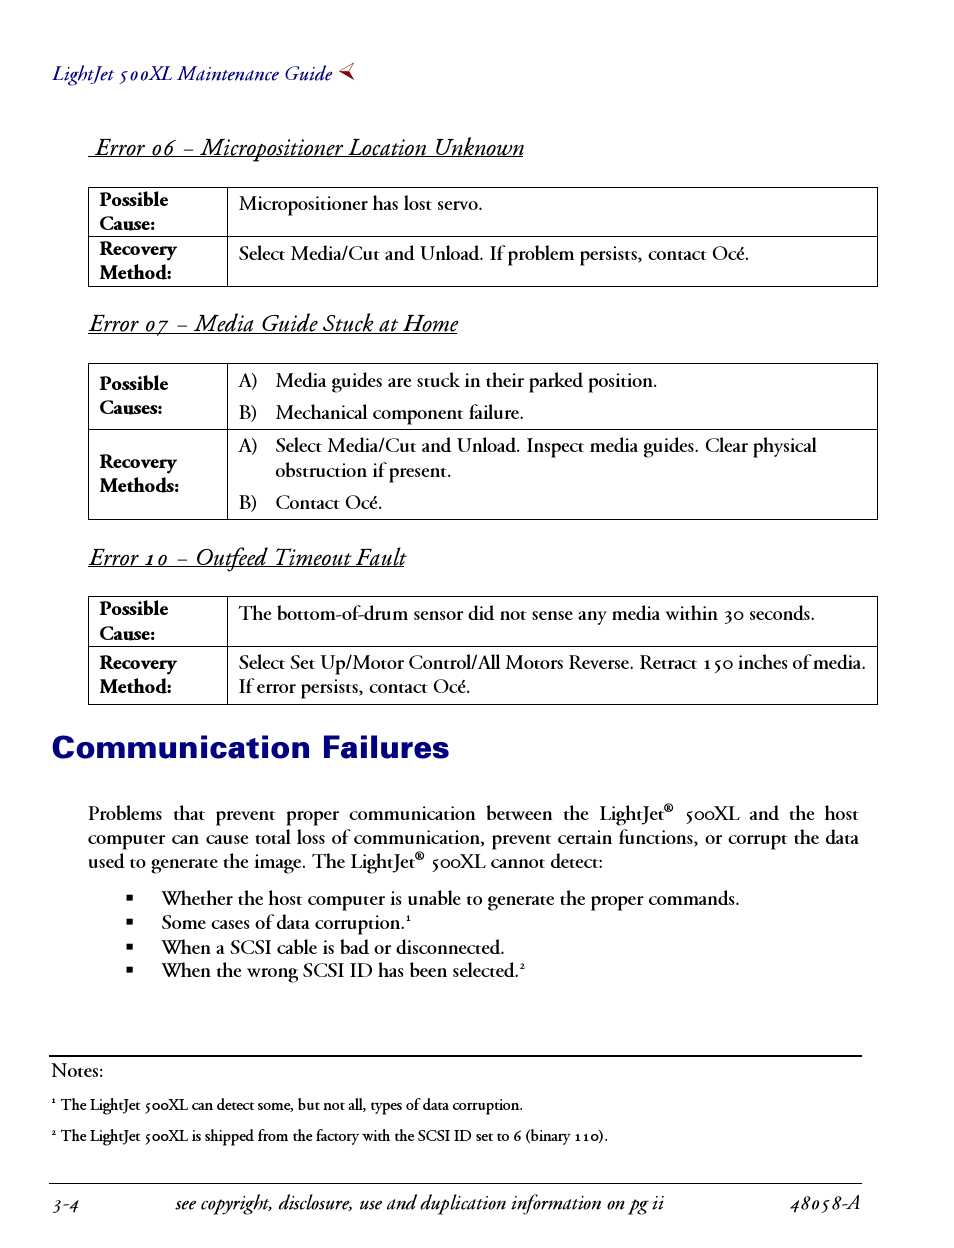 Oce North America Logo - Communication failures - Communication failures, Error 06